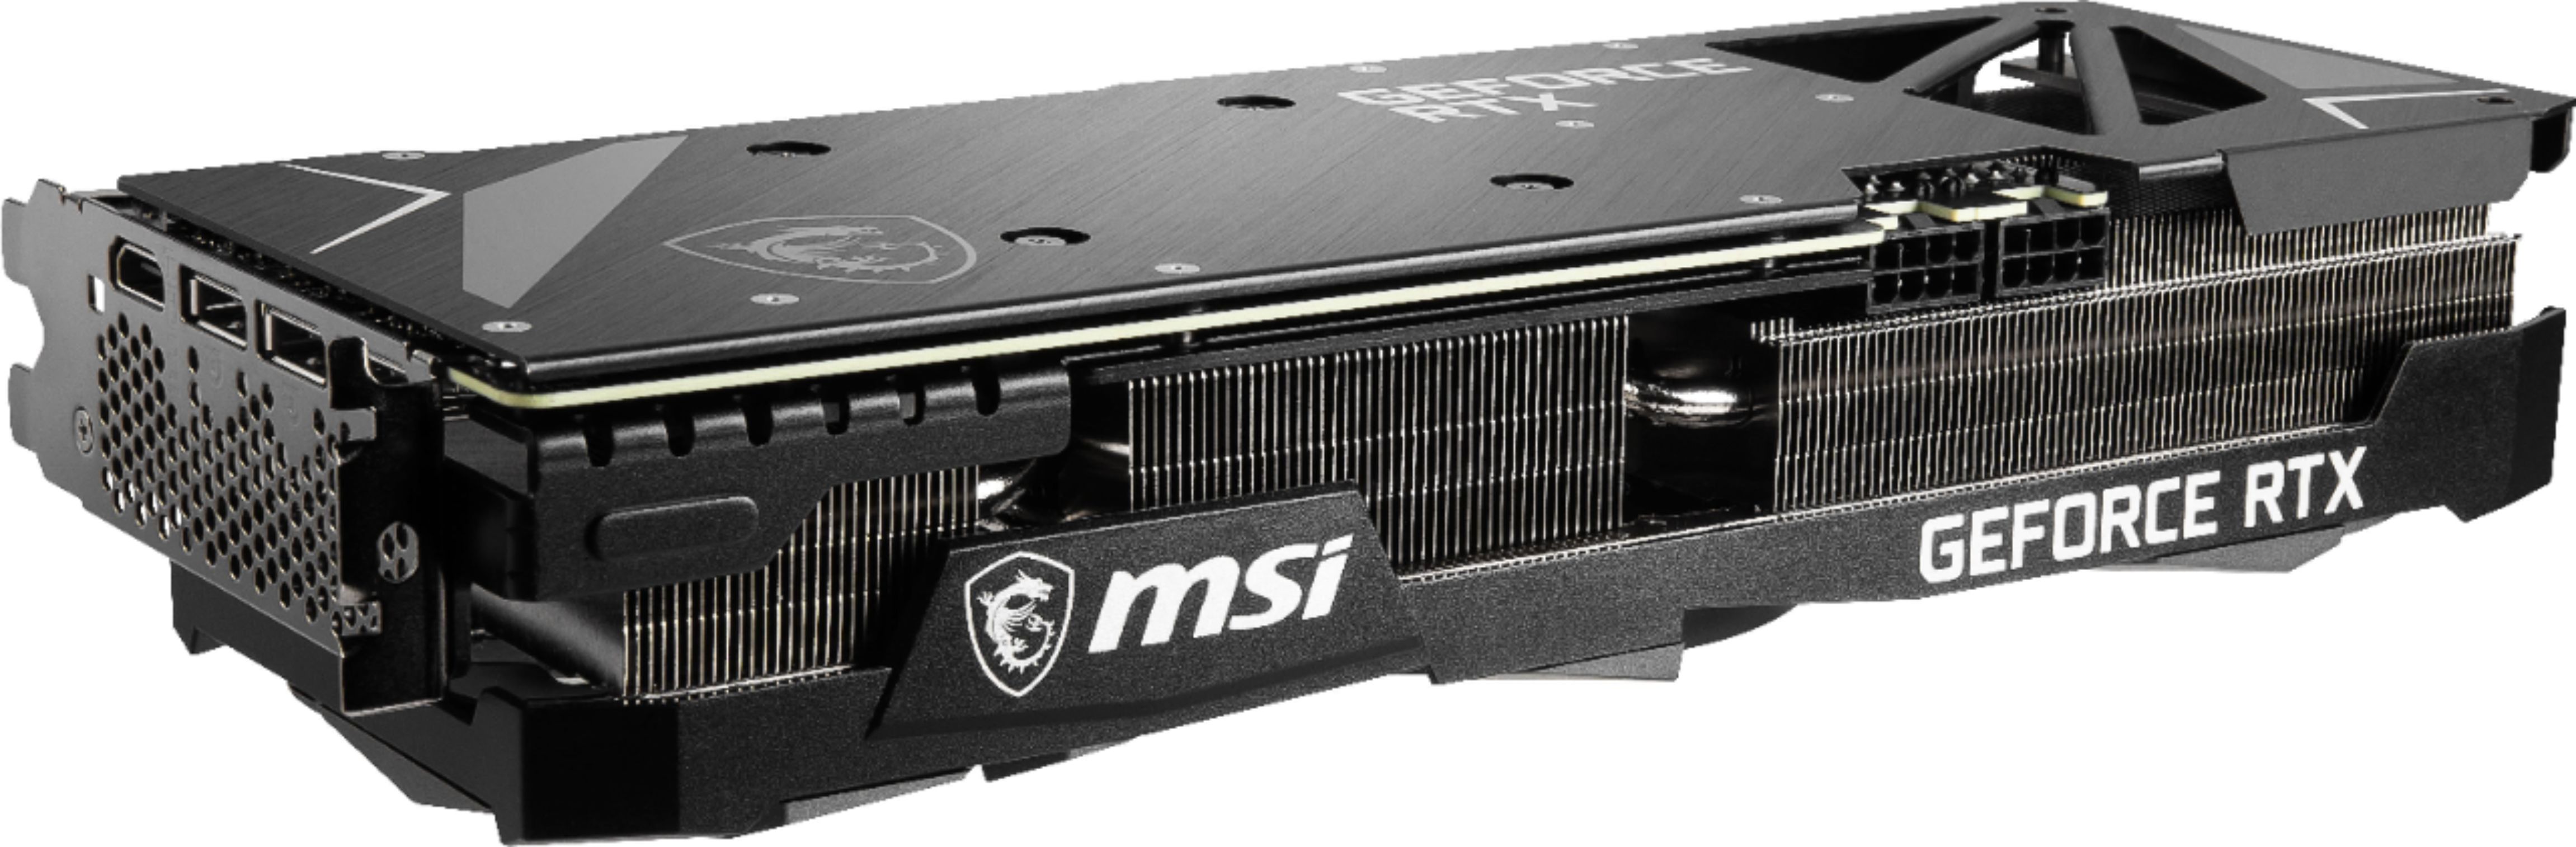 PC/タブレット PCパーツ Best Buy: MSI NVIDIA GeForce RTX 3070 Ti VENTUS 3X OC 8GB GDDR6 